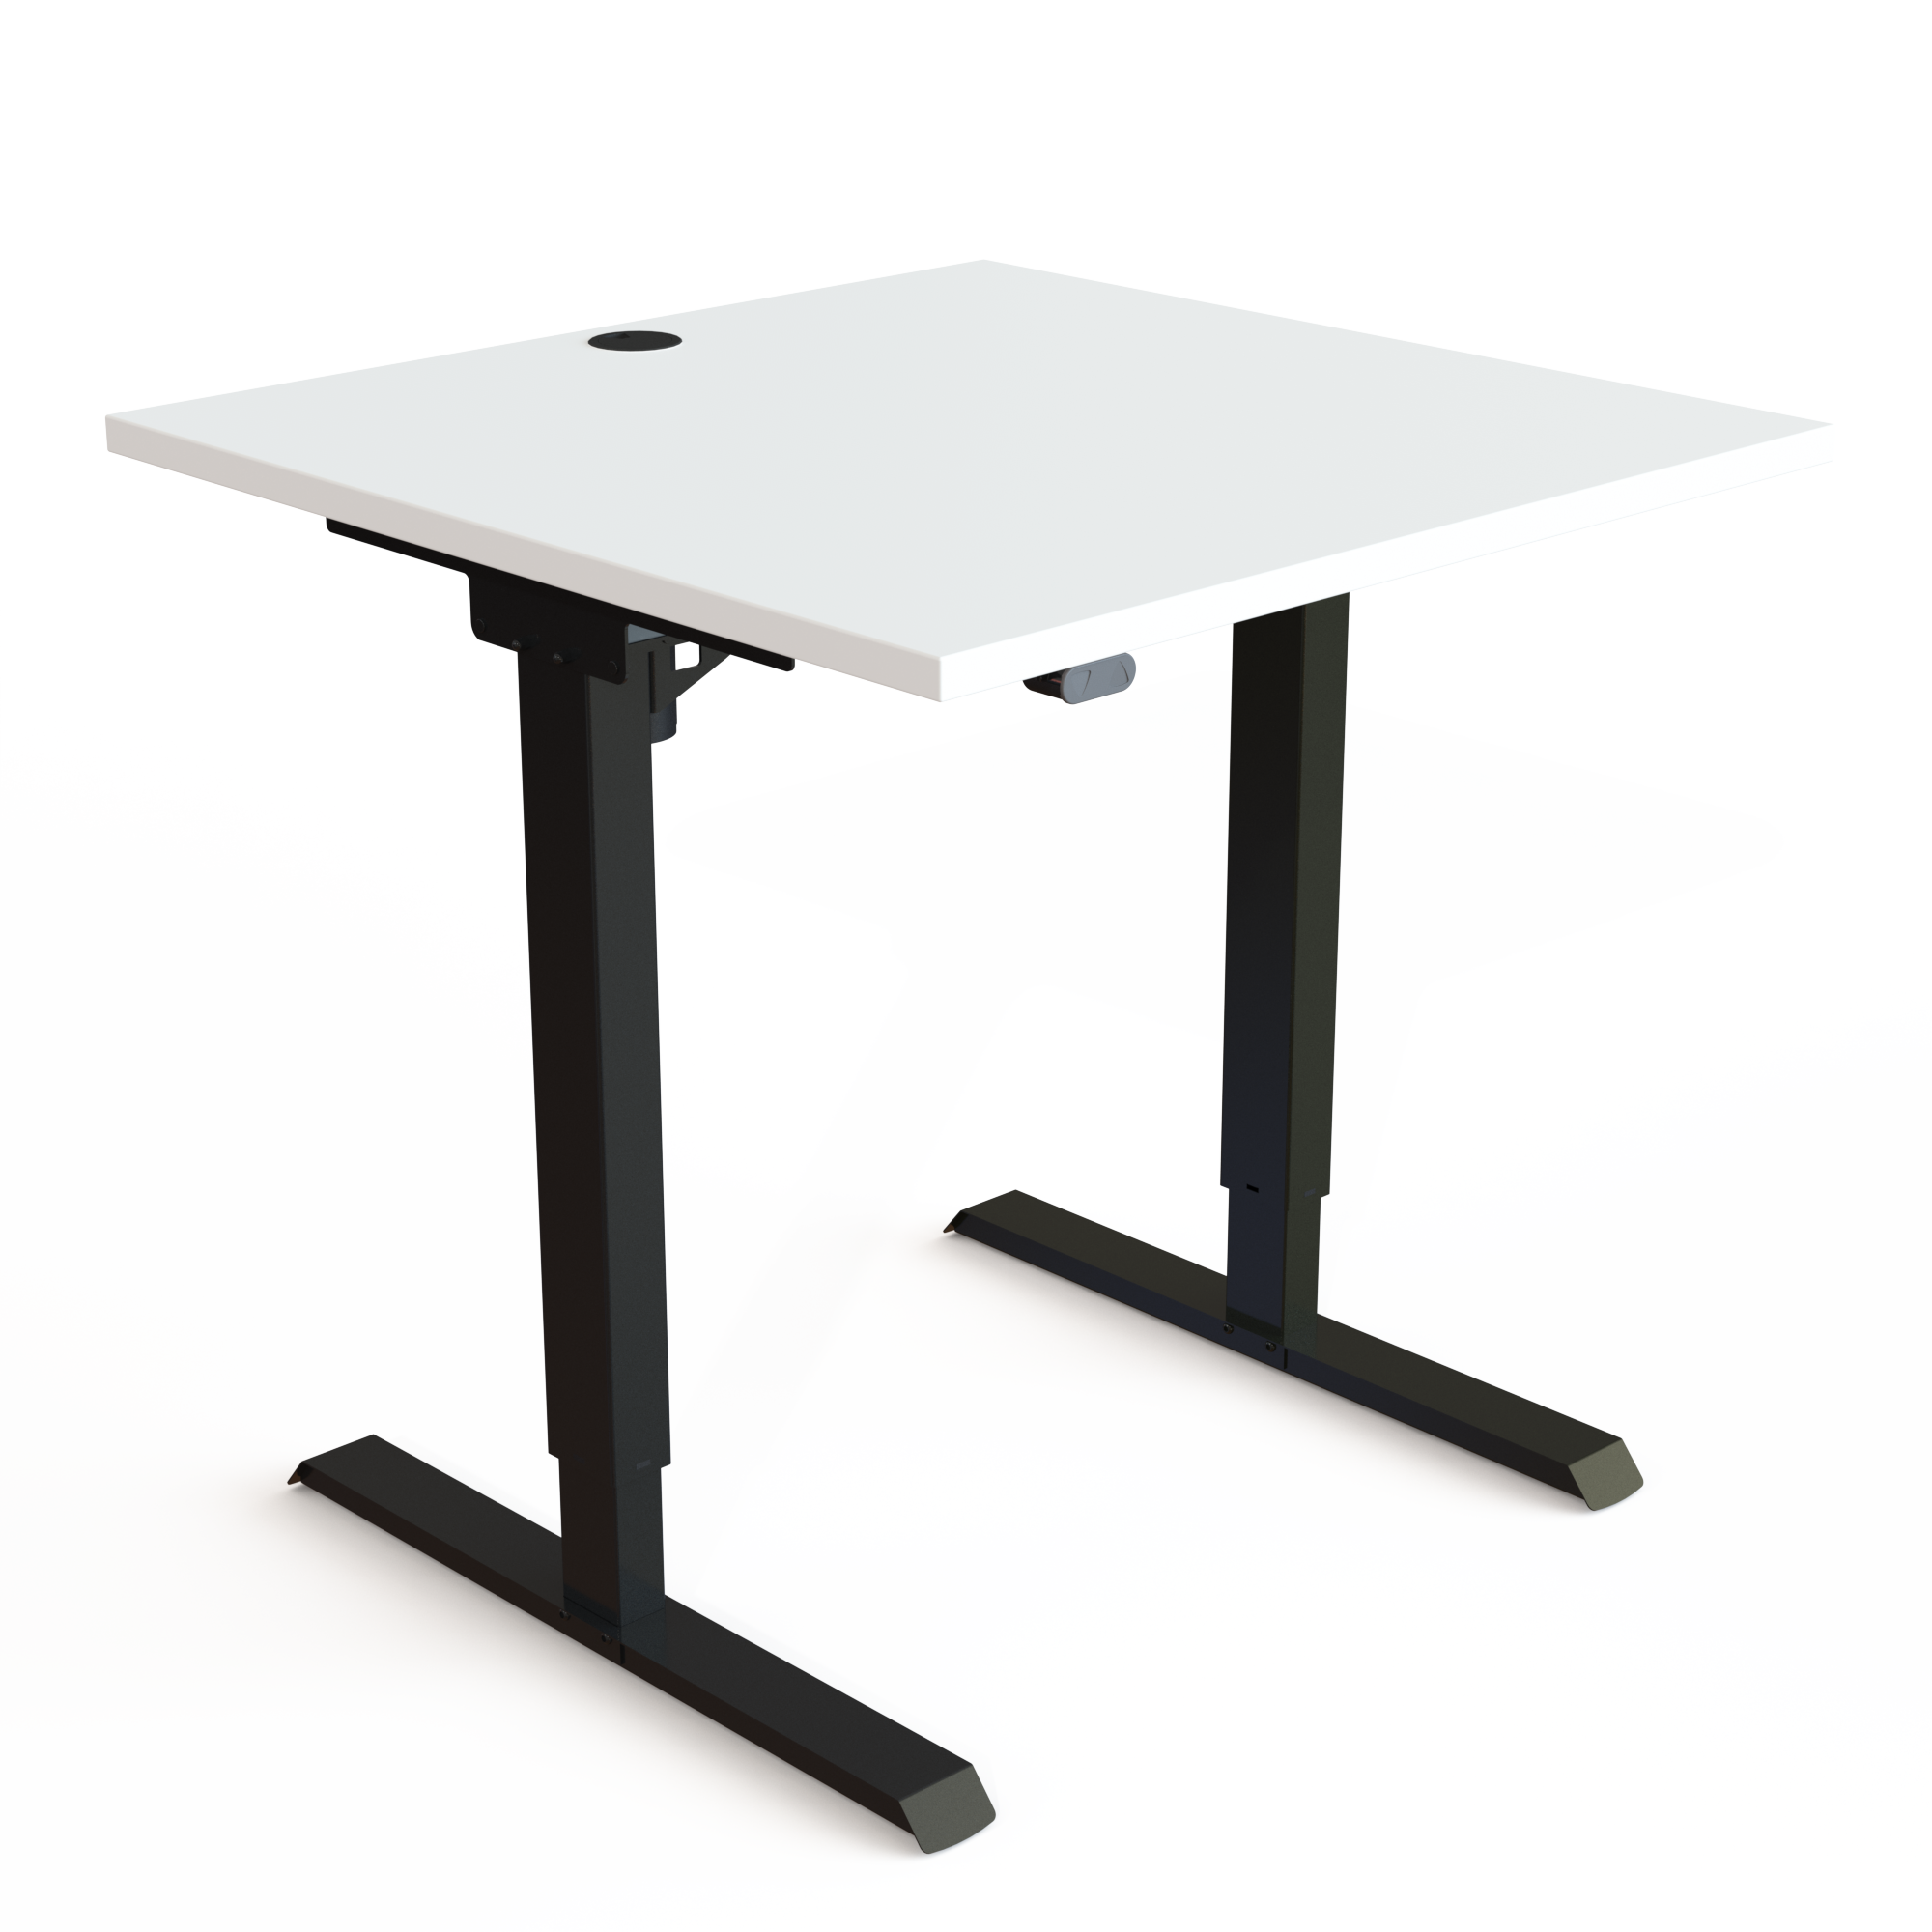 Electric Adjustable Desk | 80x80 cm | White with black frame